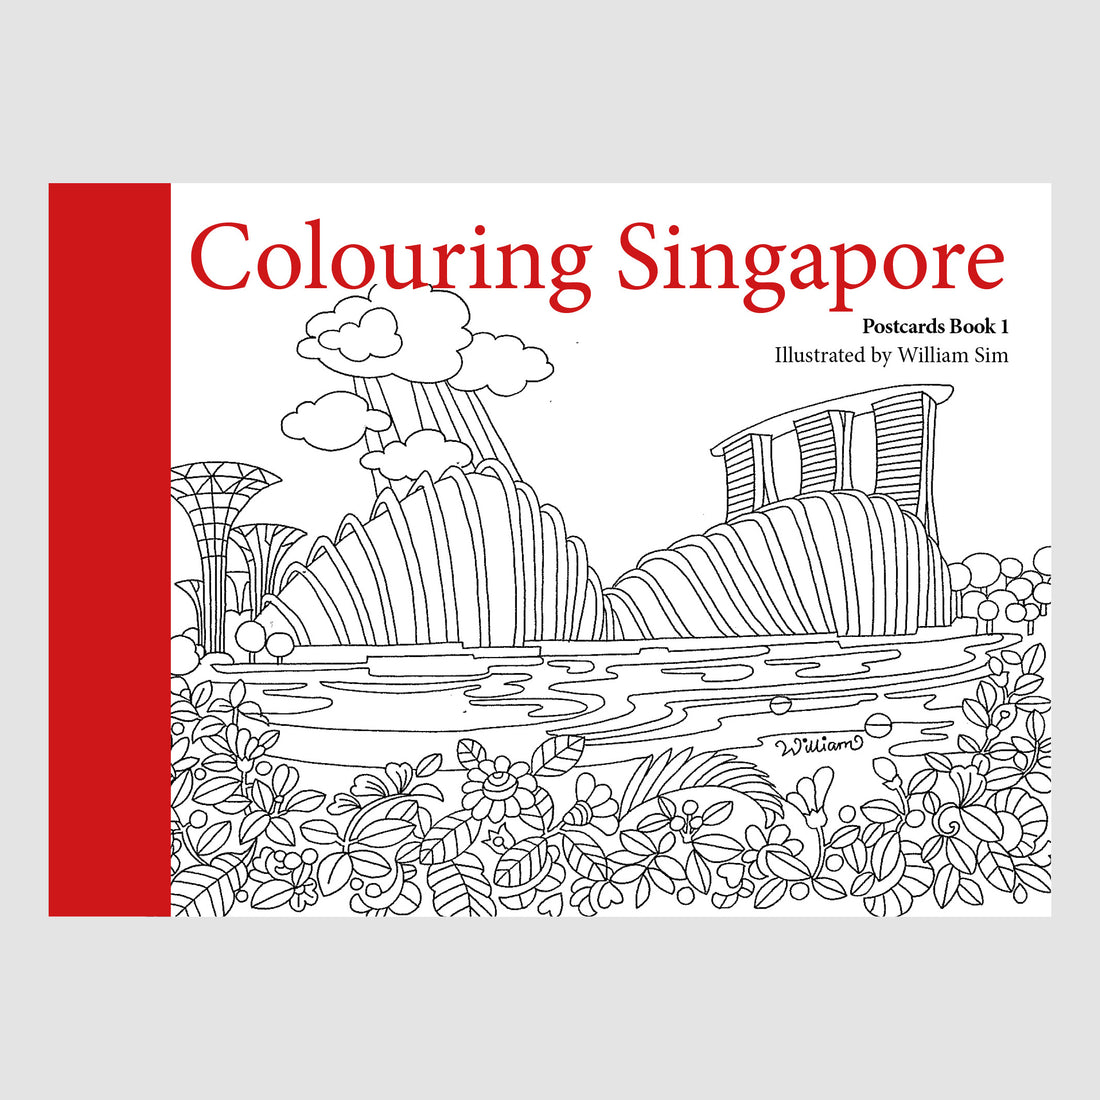 Colouring Singapore: Postcards Book 1